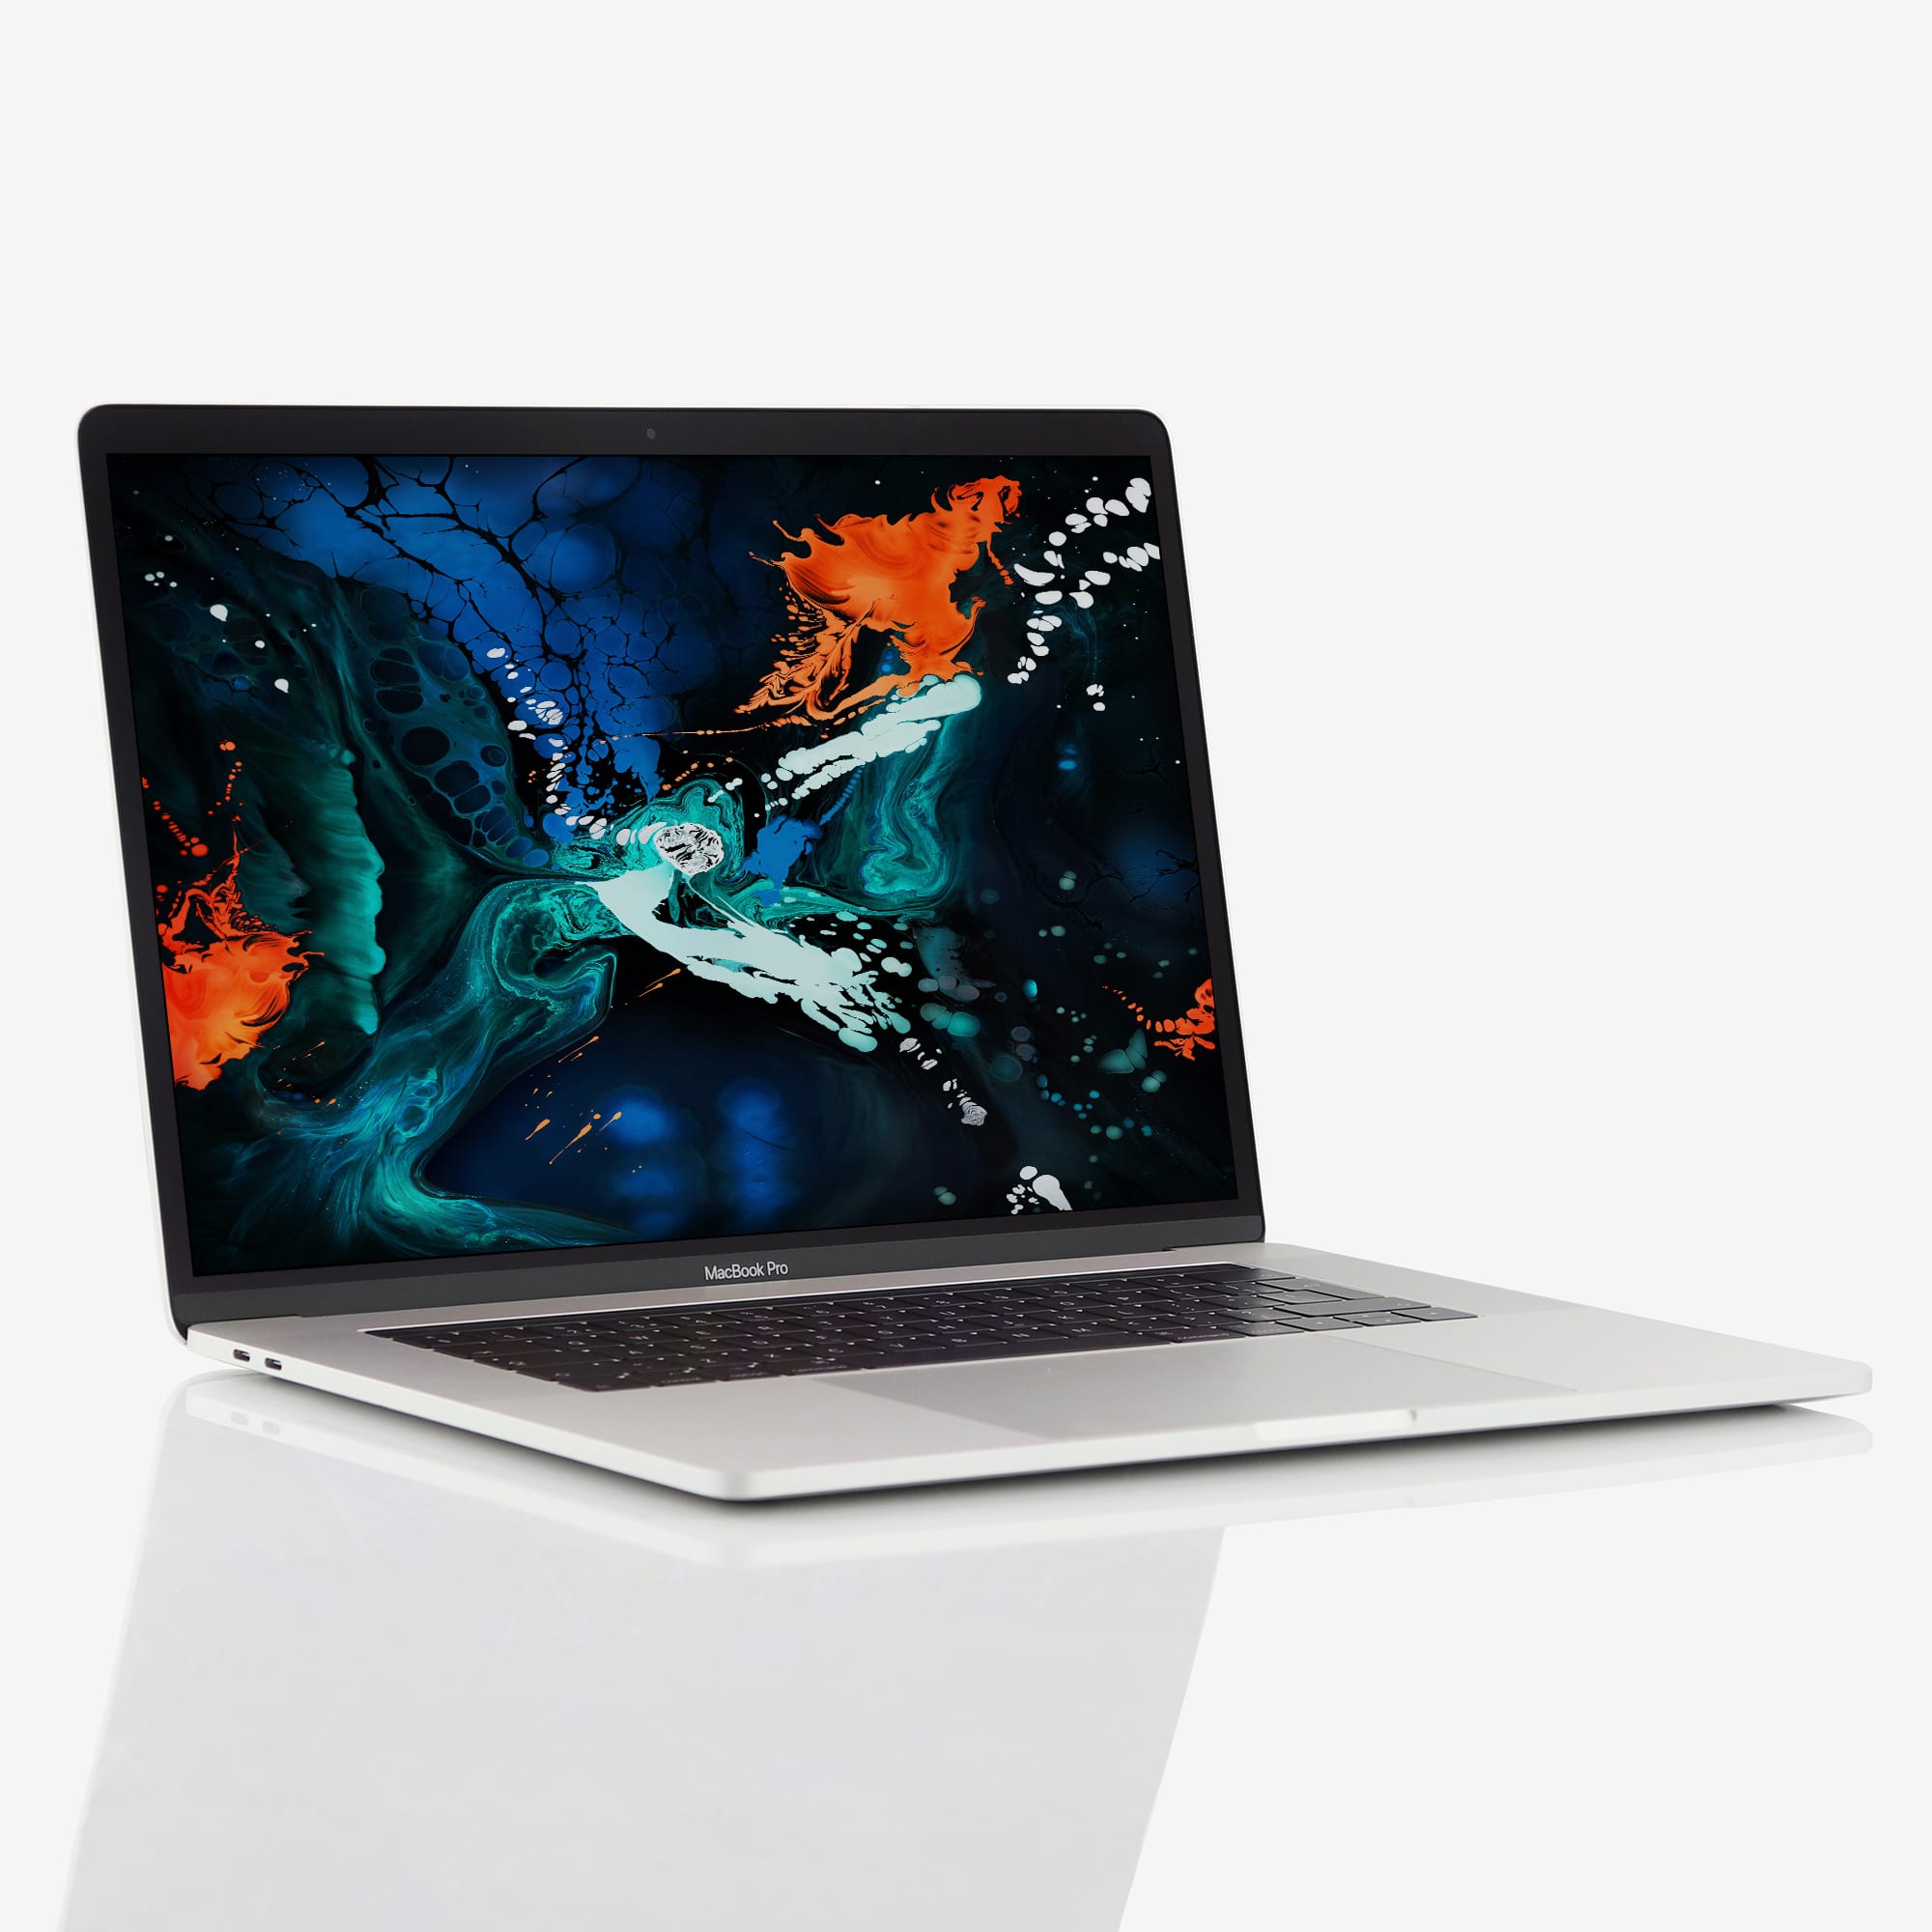 1 x Apple MacBook Pro Retina 15 Inch Touchbar Intel Core i7 2.60 GHz (2016)